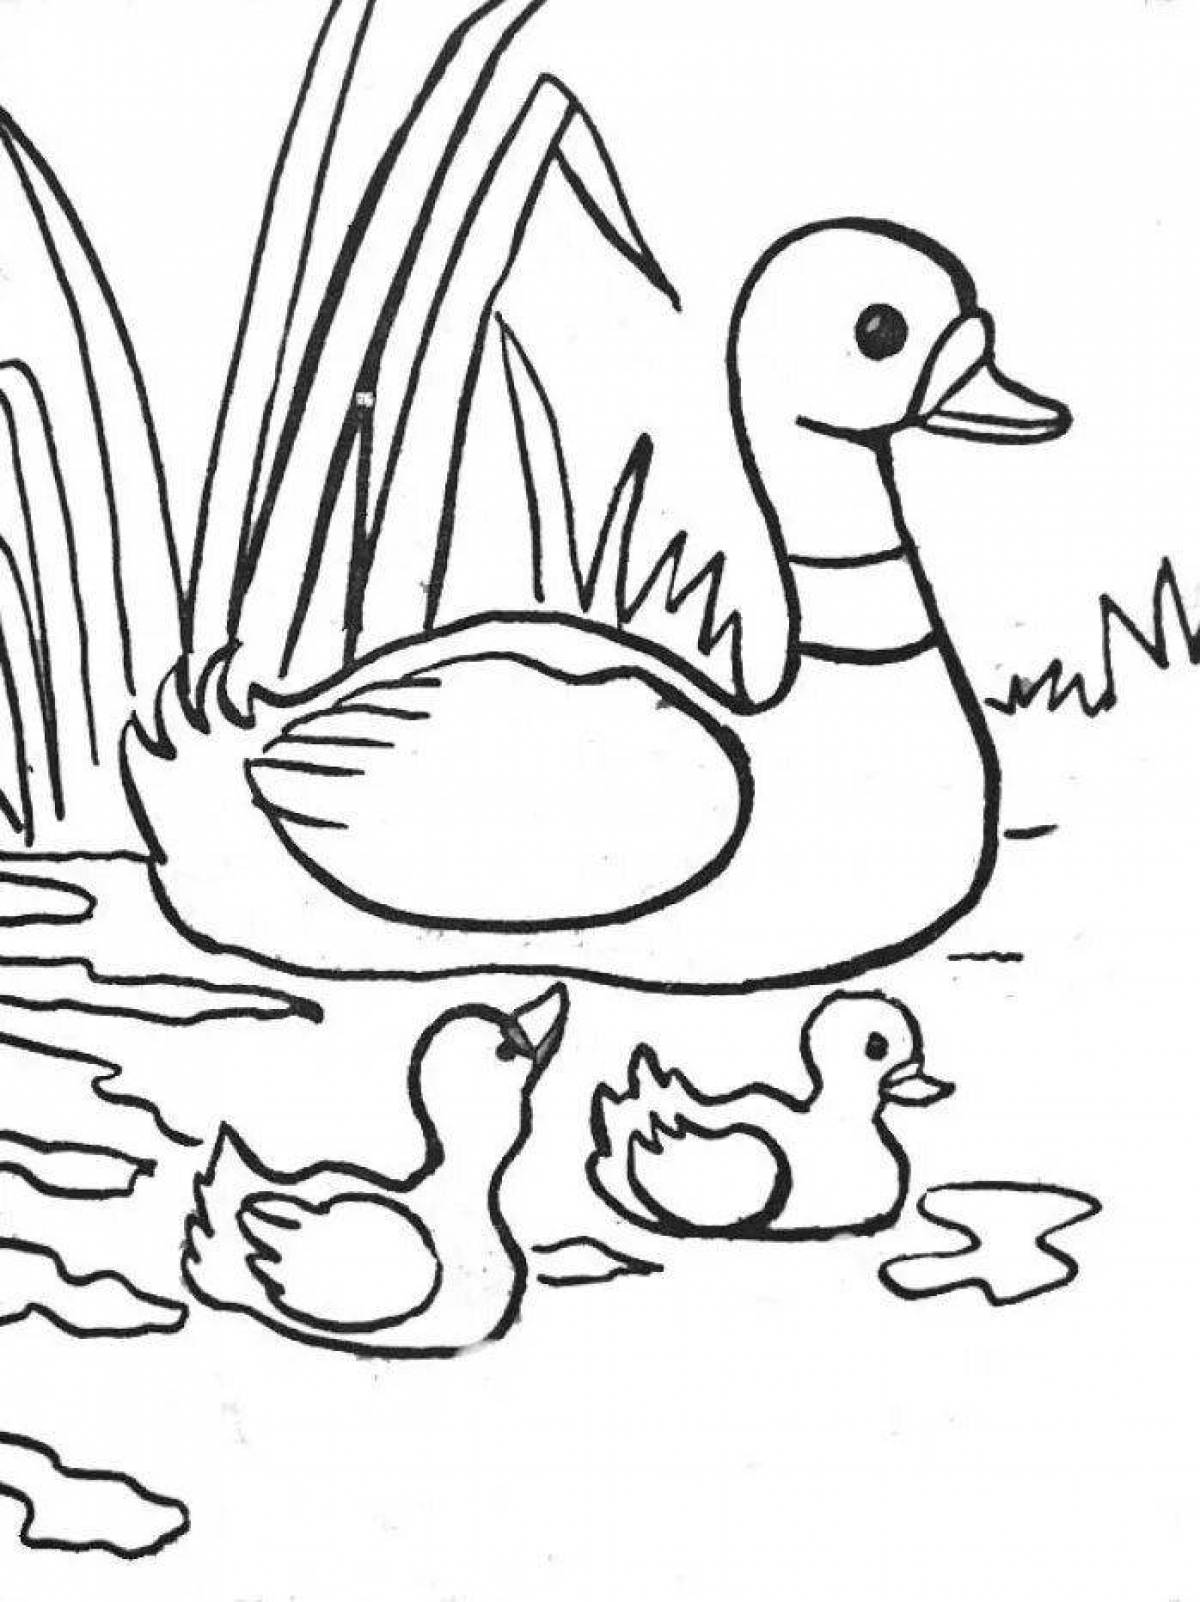 Delightful duck with ducklings